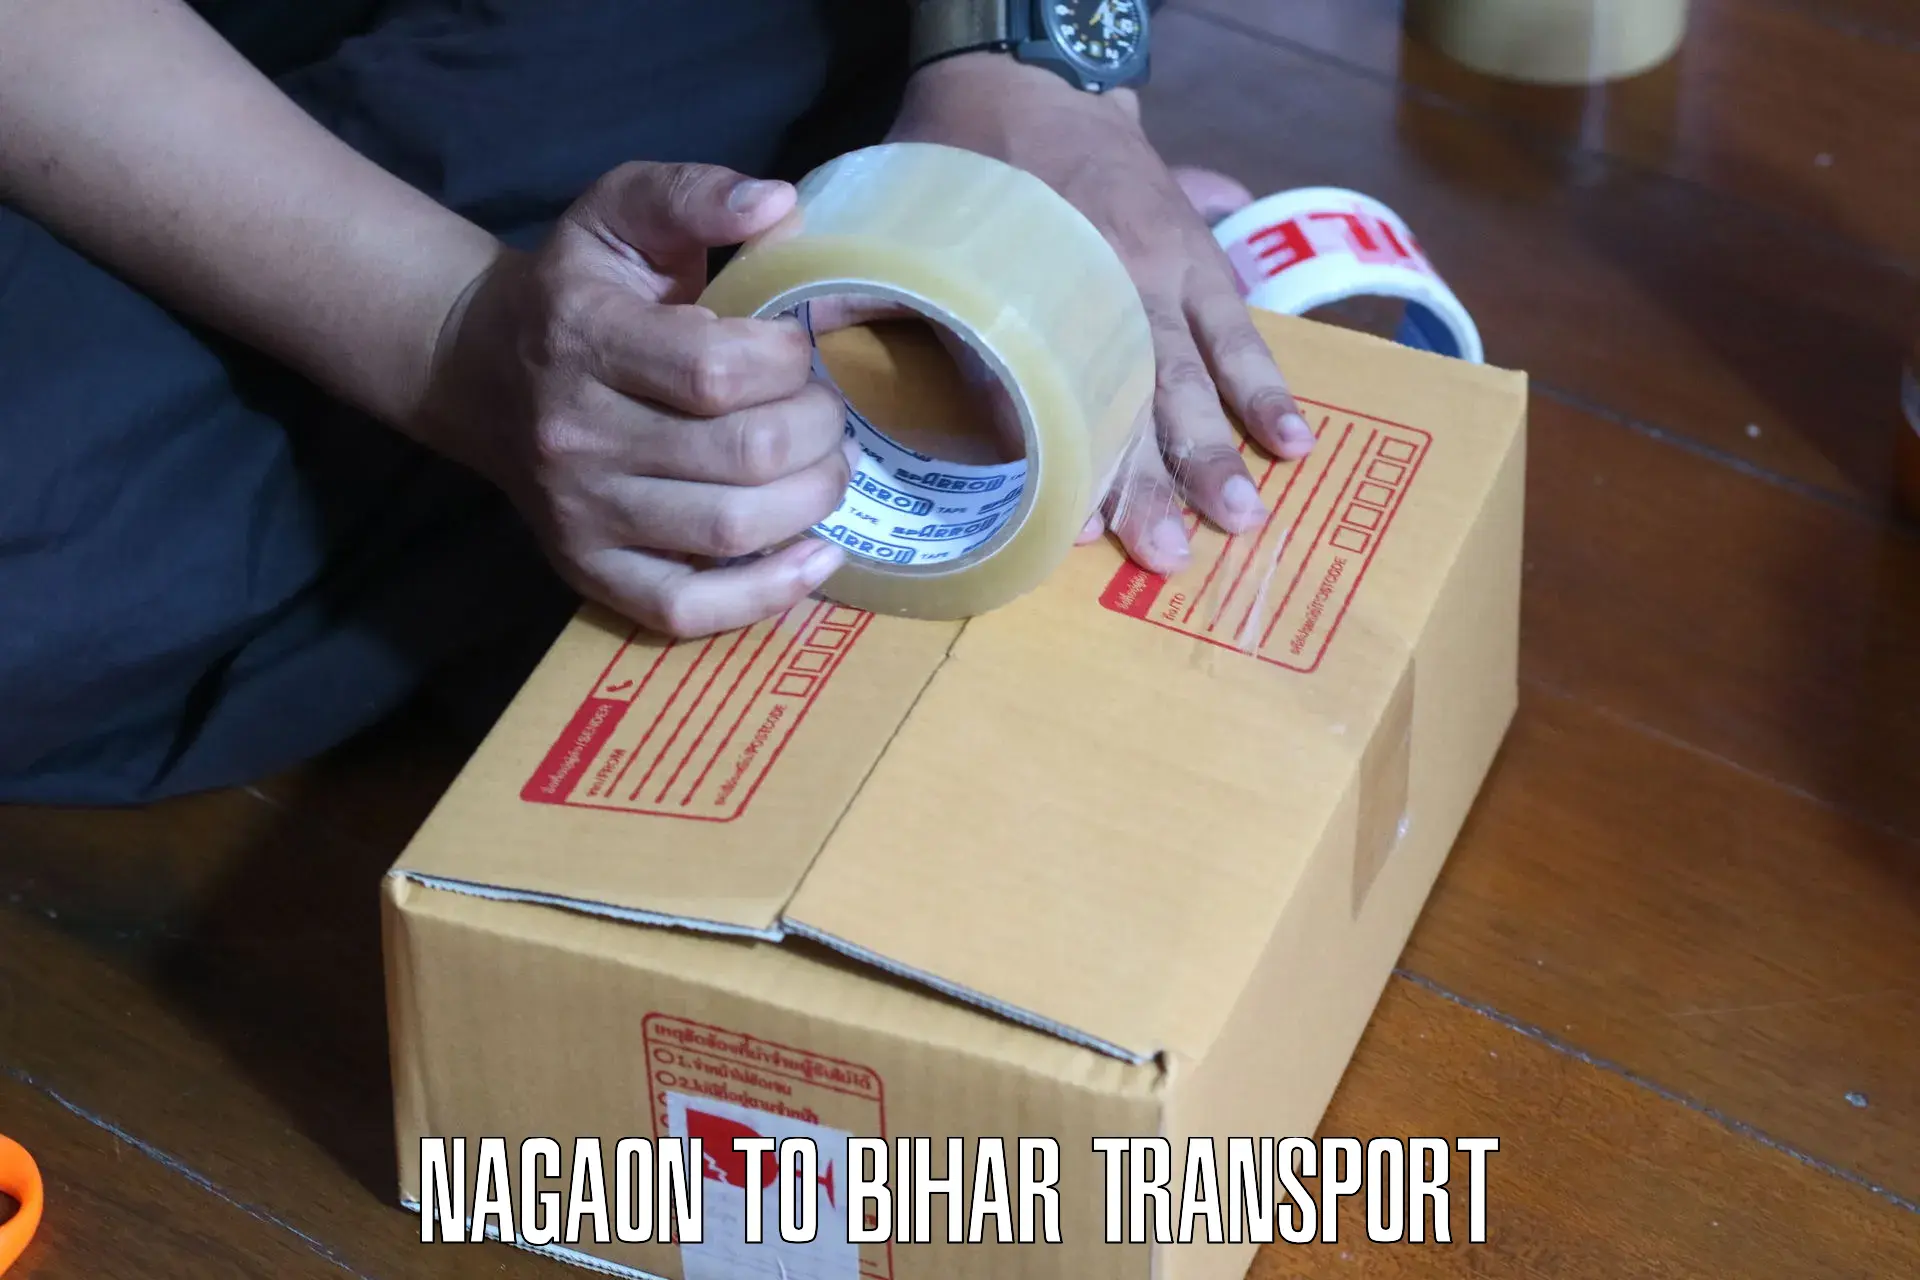 Daily transport service Nagaon to Sheonar